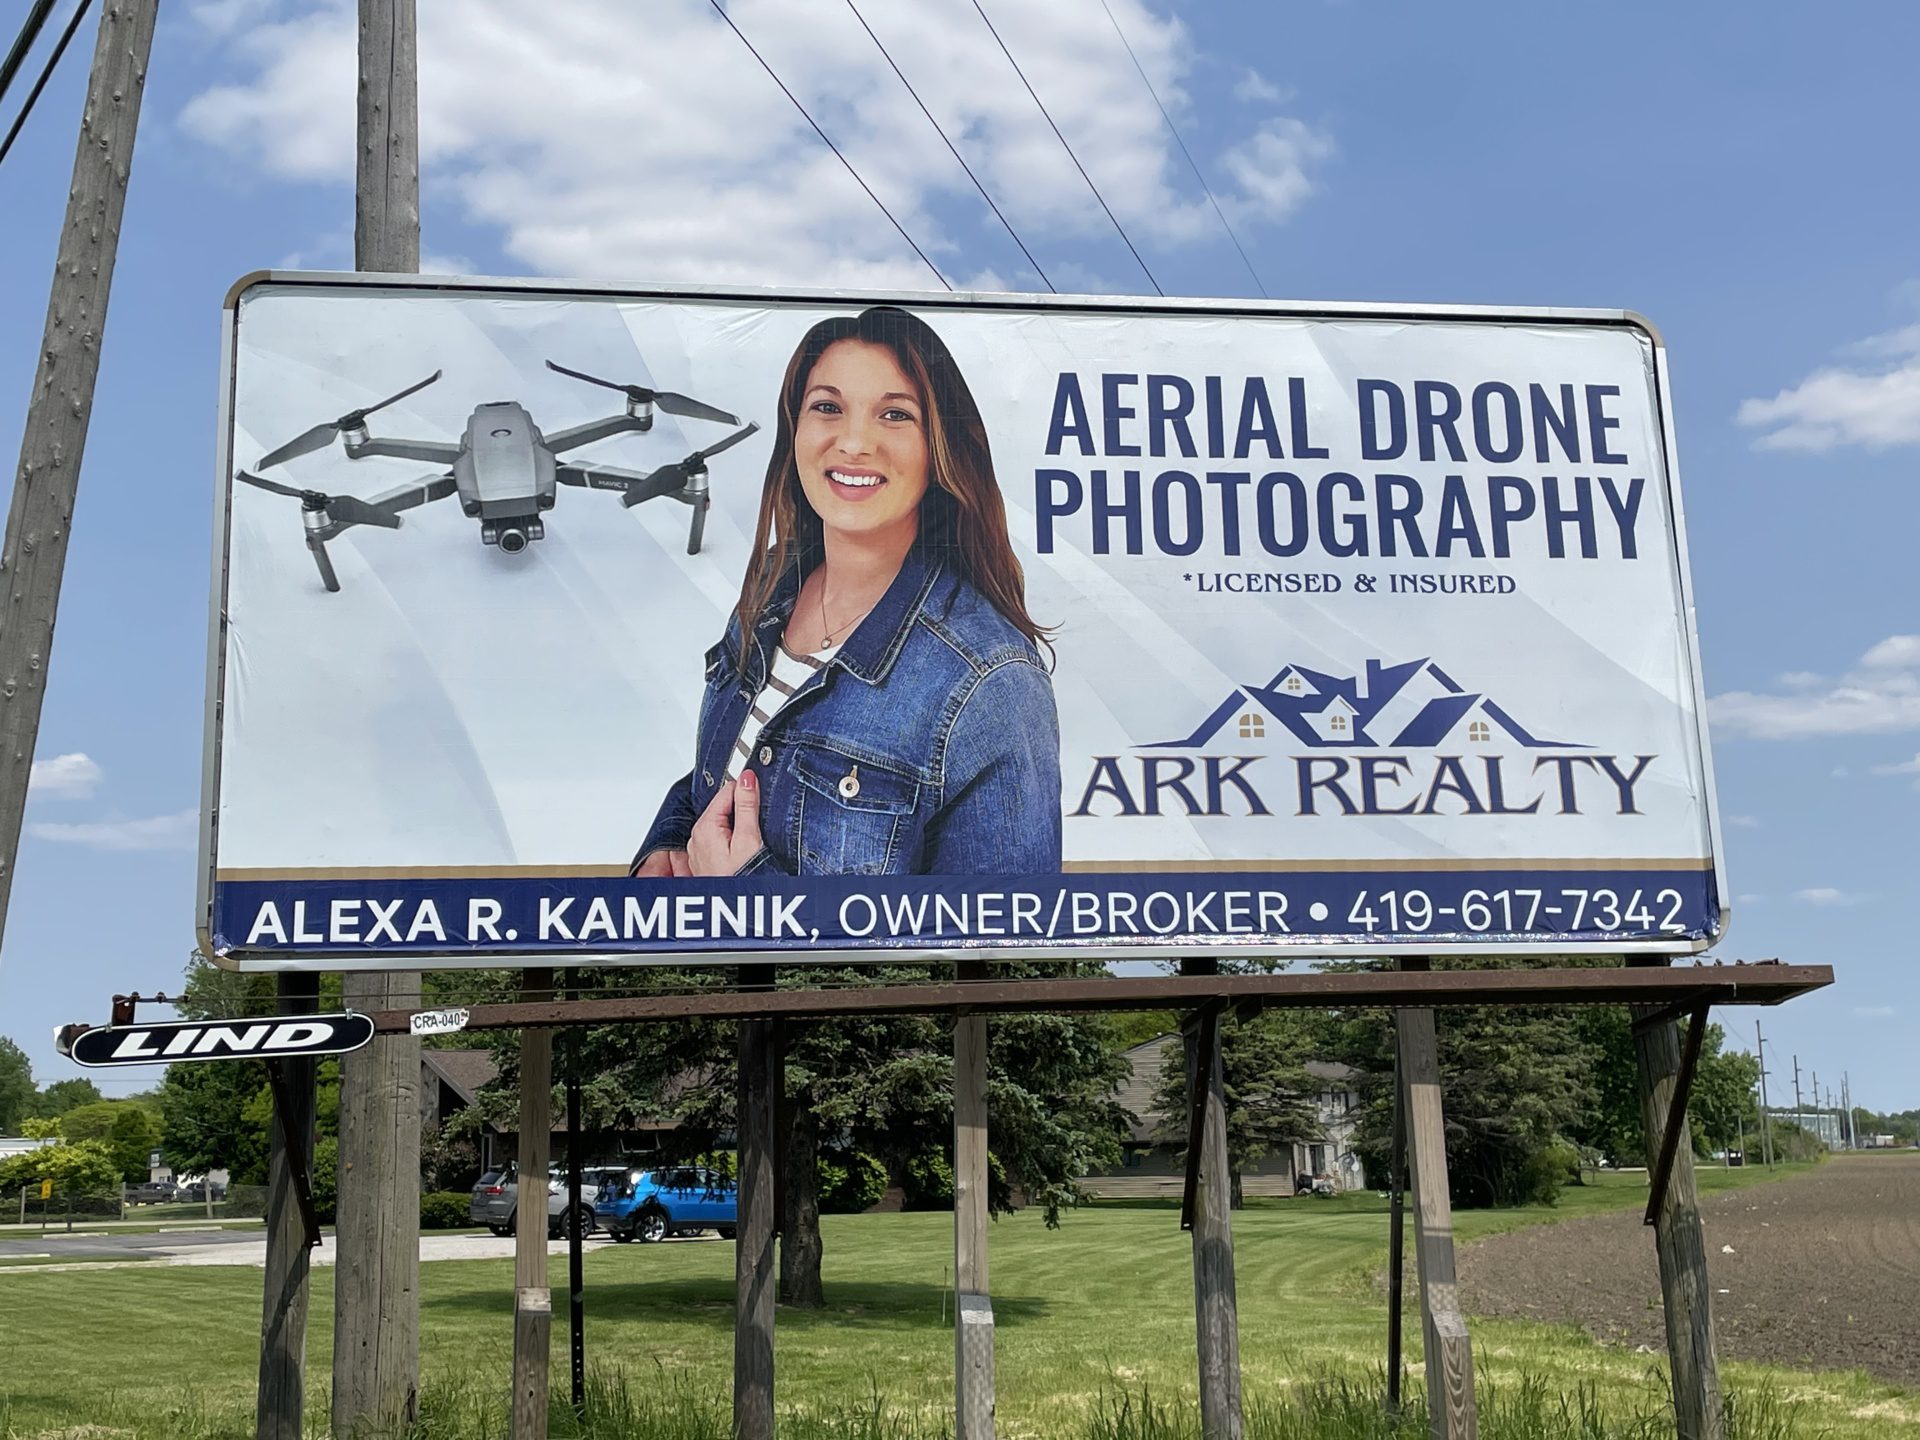 Ark Realty Billboard, Aerial drone realty photo billboard, realty billboard